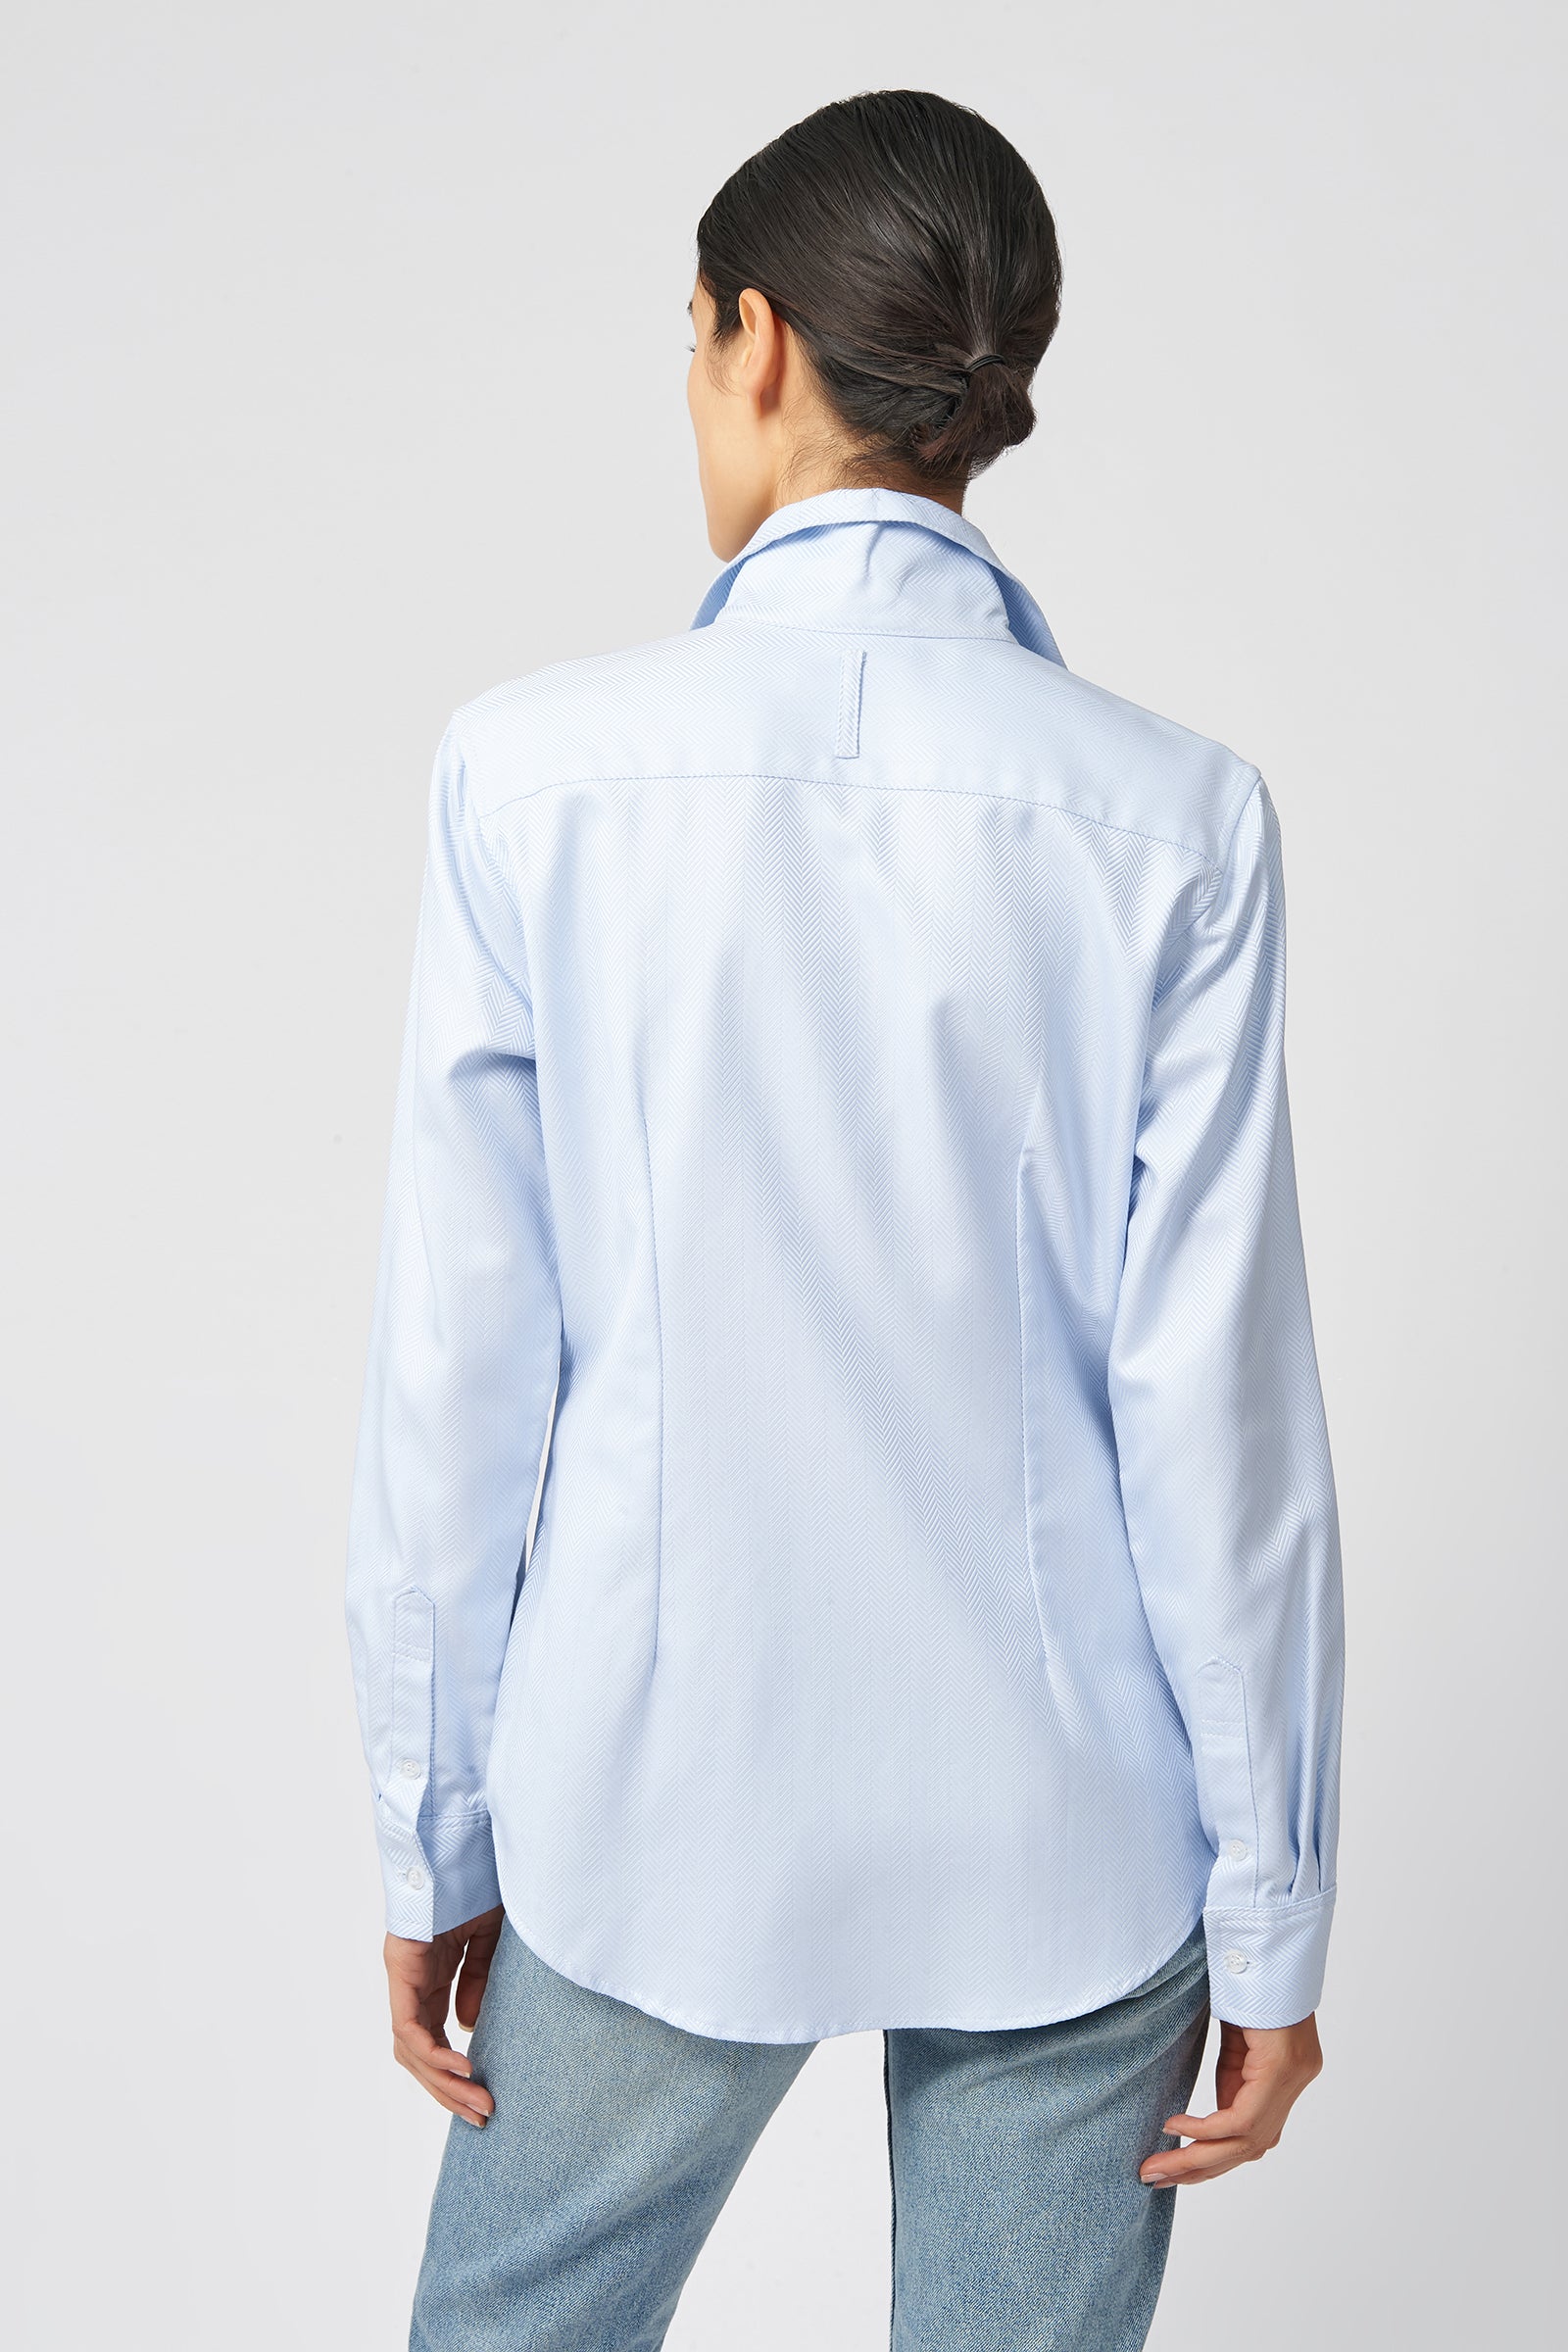 Kal Rieman Ginna Tailored Shirt in French Blue Herringbone on Model Back View